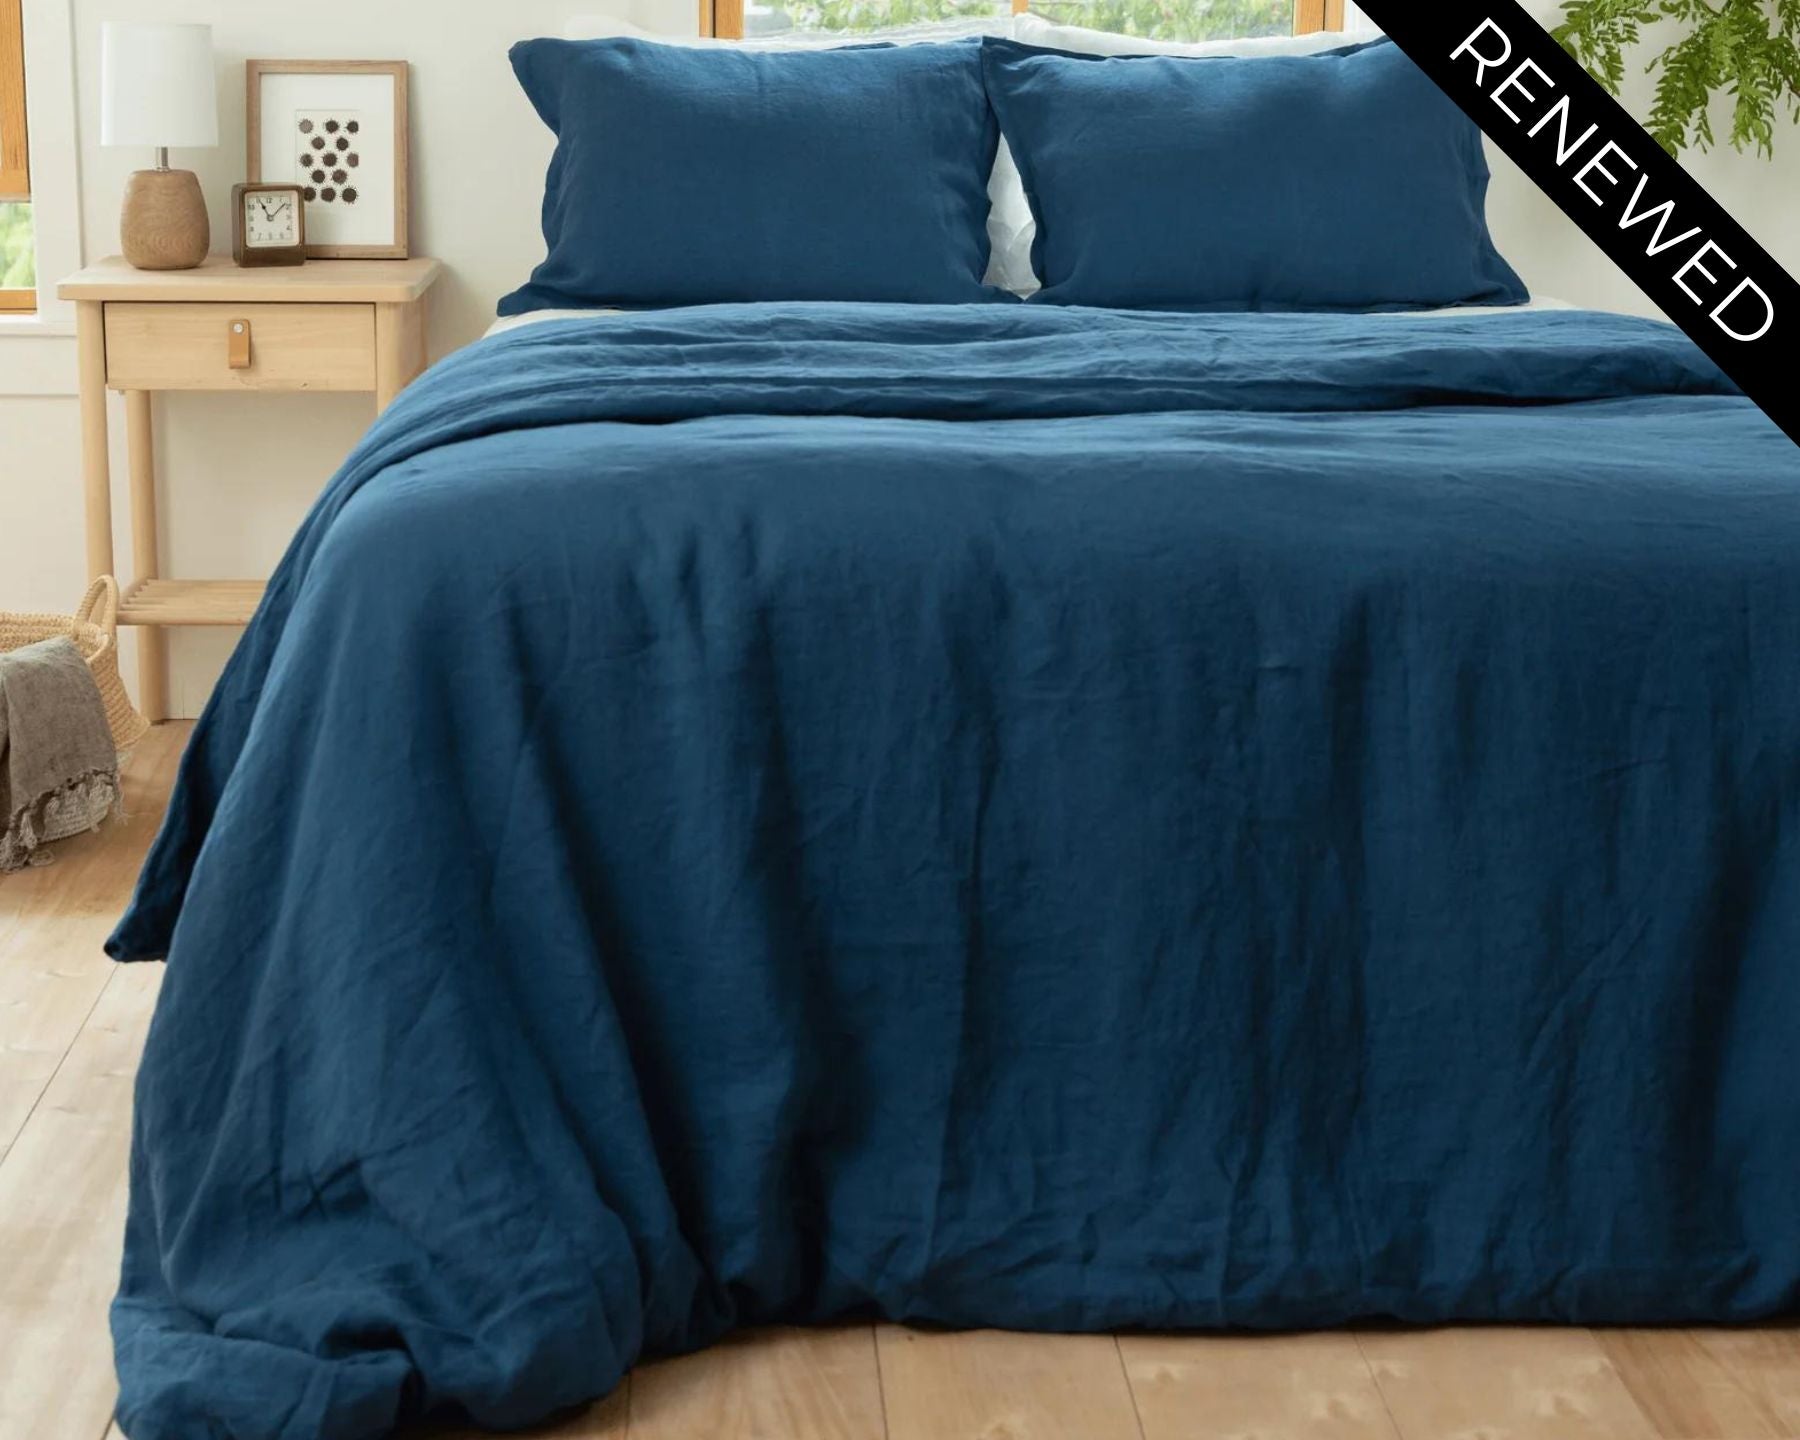 Organic European Linen Duvet Cover Sets | Solid Colors | Renewed